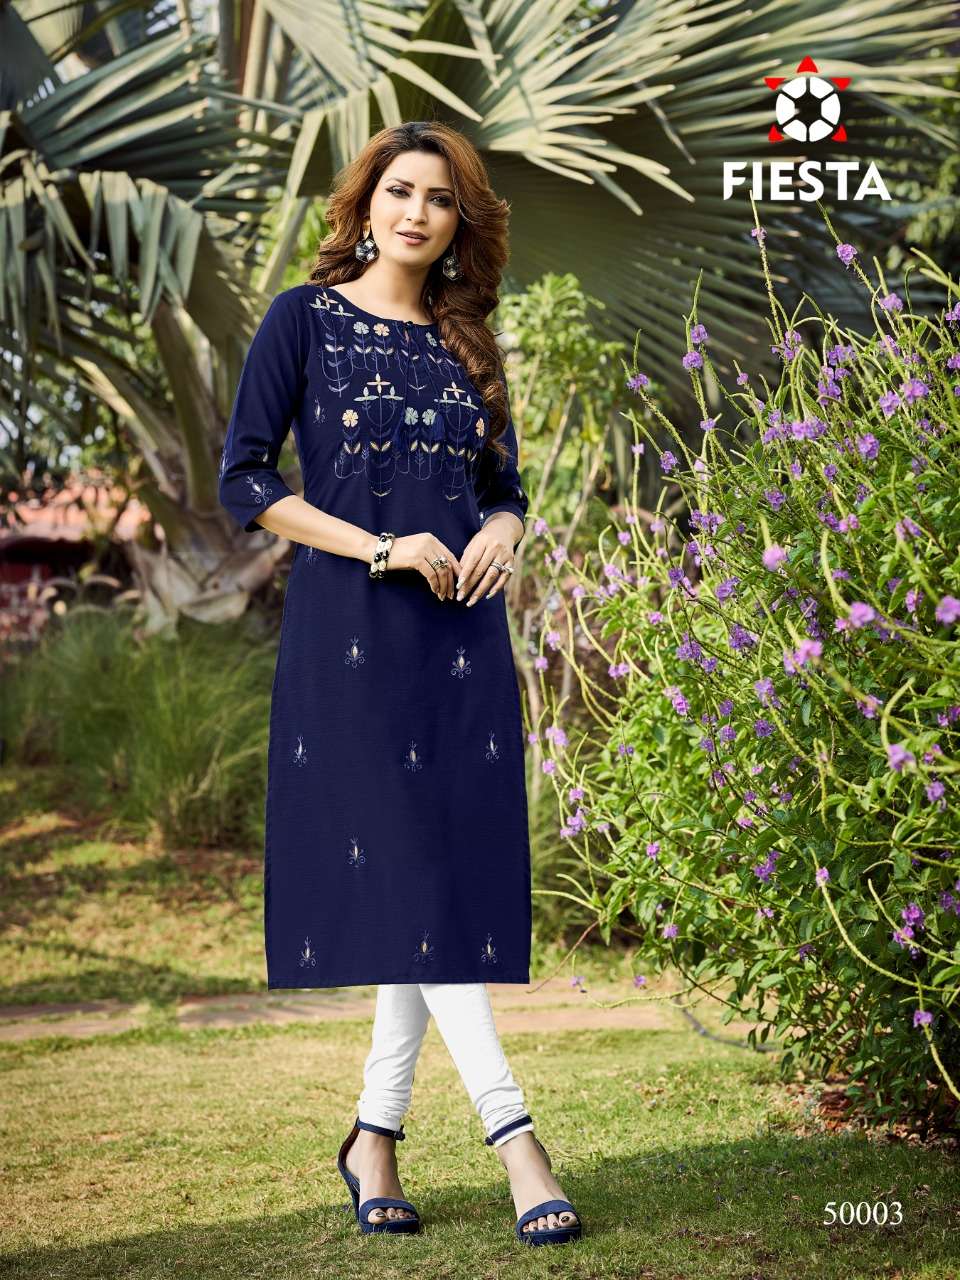 Fiesta Rangpriya Smooth And Soft Modal  Casual Wear  Kurtis Catalog